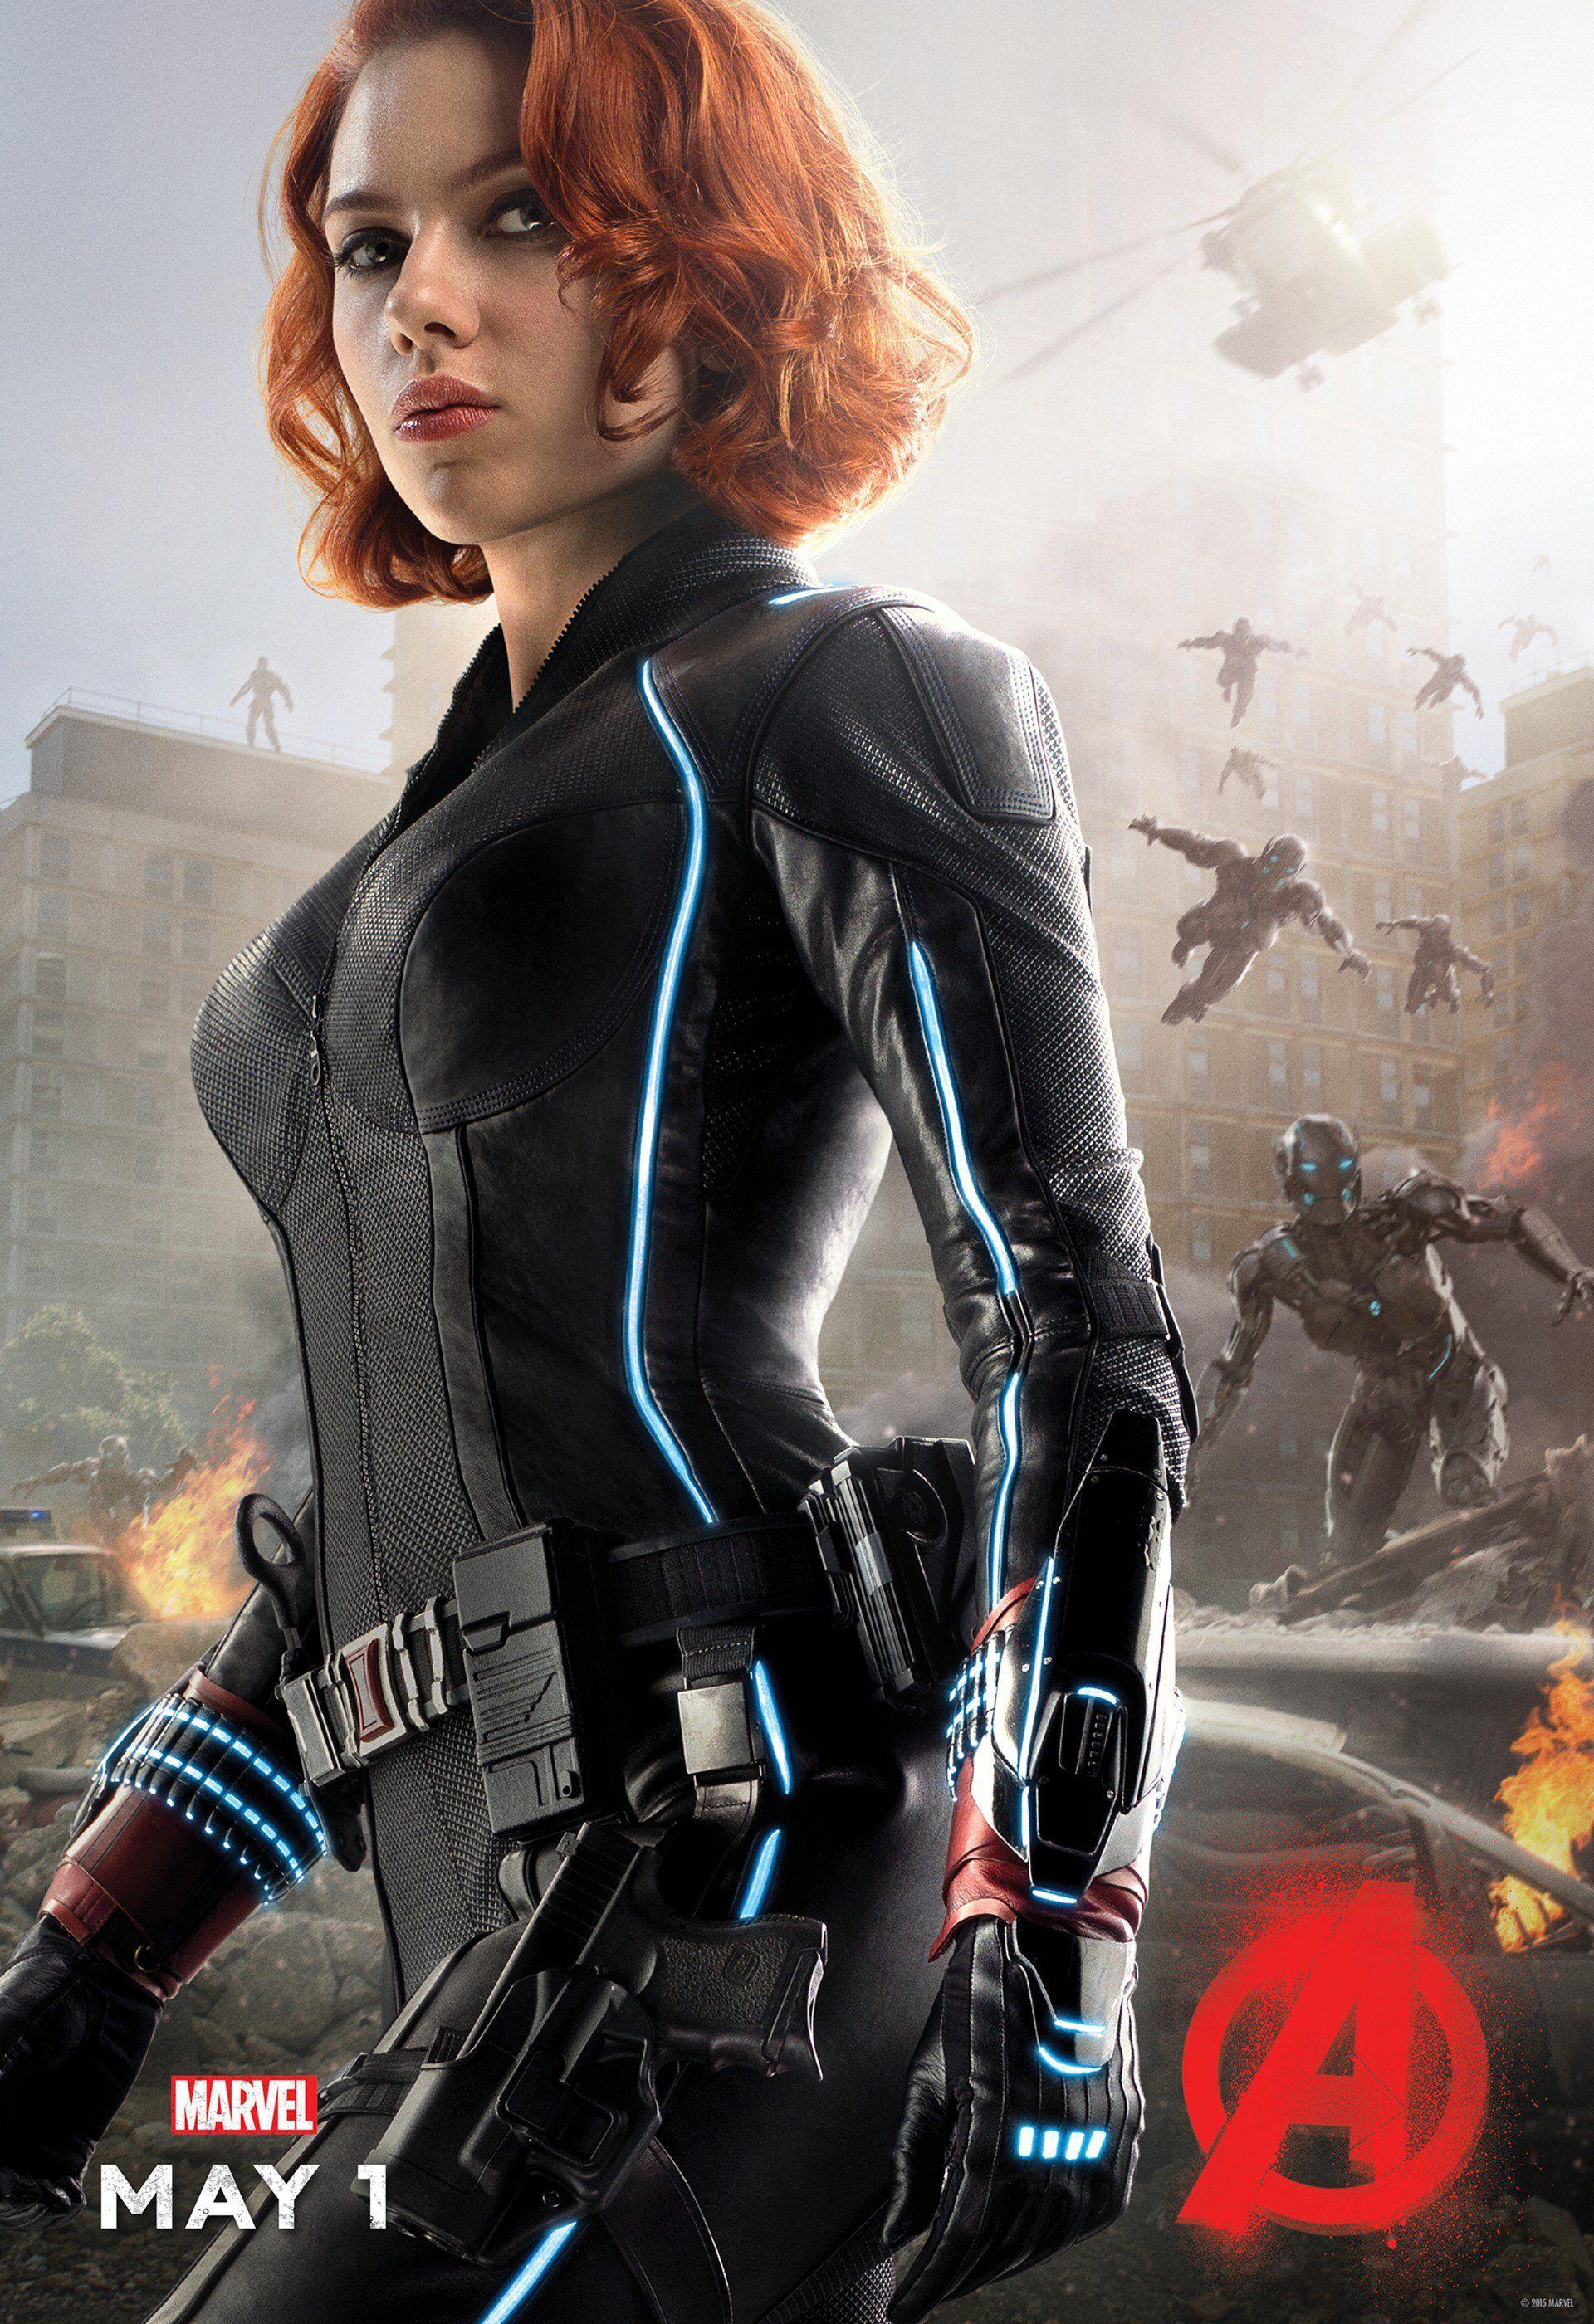 High Res The Avengers 2 Scarlett Johansson Black Widow Poster